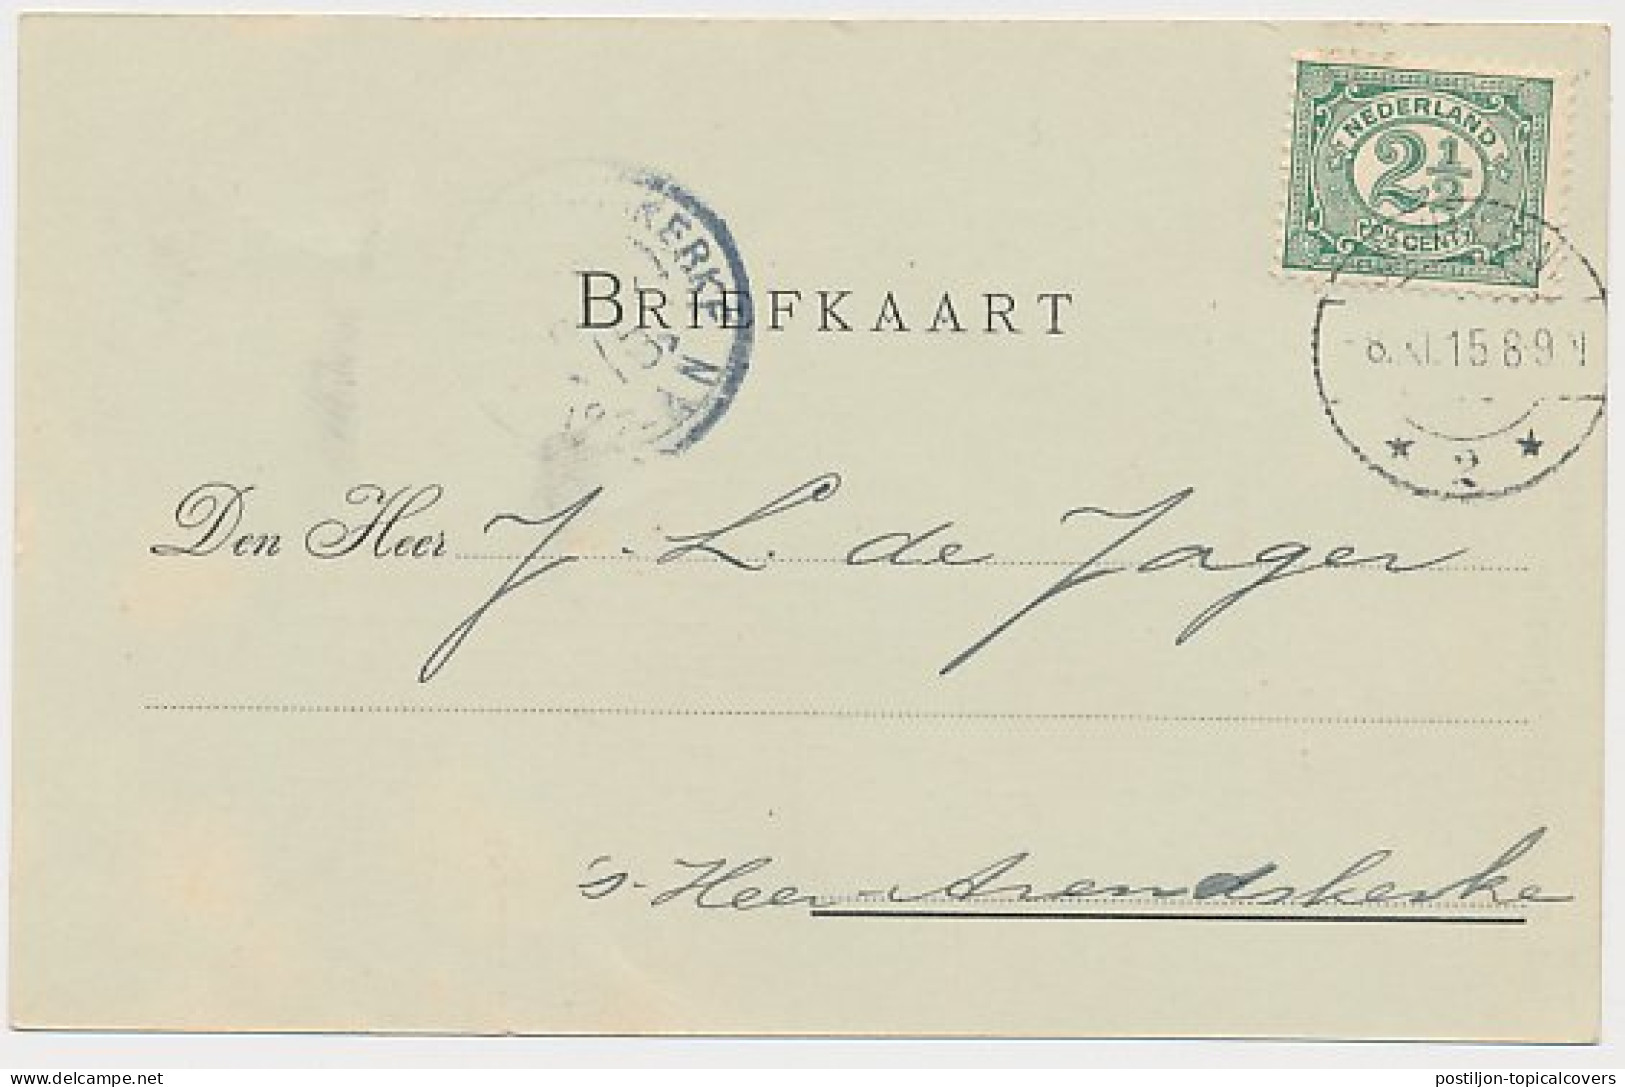 Firma Briefkaart Sas Van Gent - Beetwortelsuikerfabriek - Unclassified